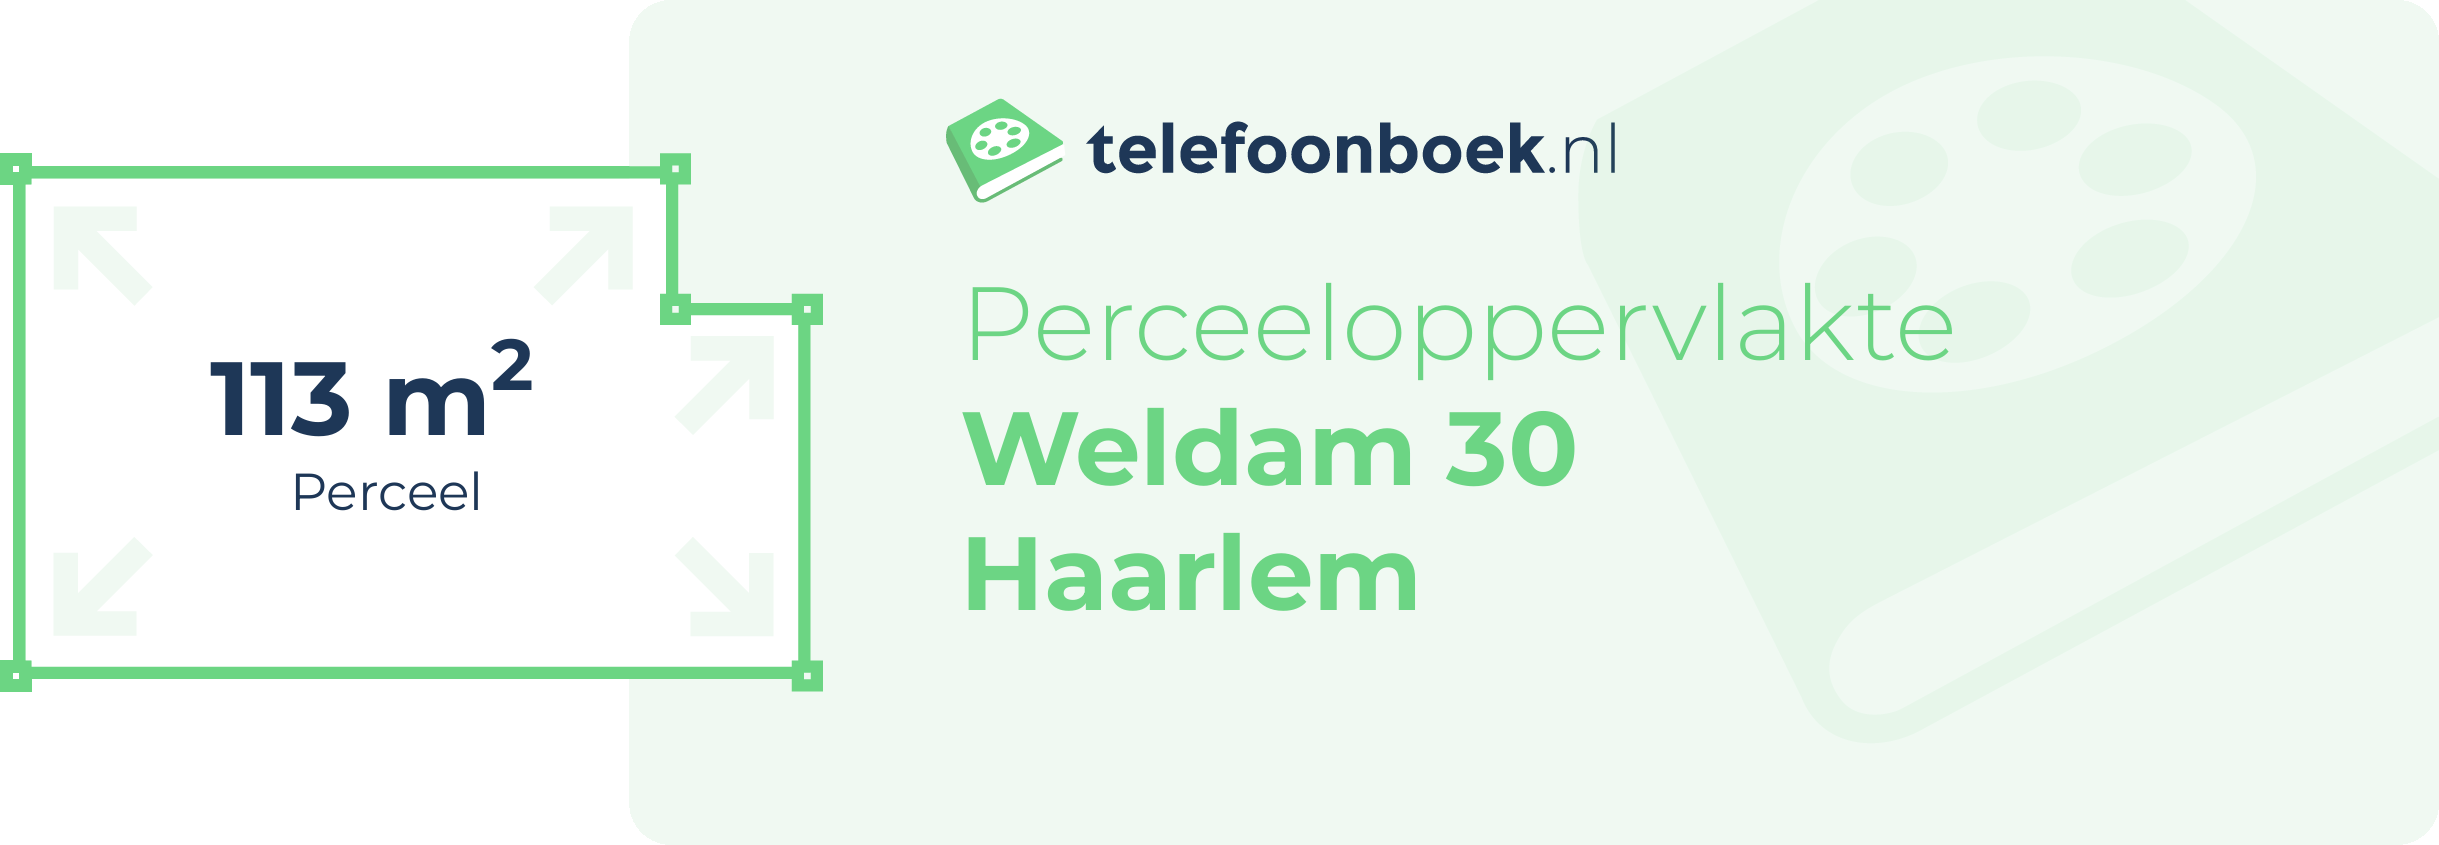 Perceeloppervlakte Weldam 30 Haarlem